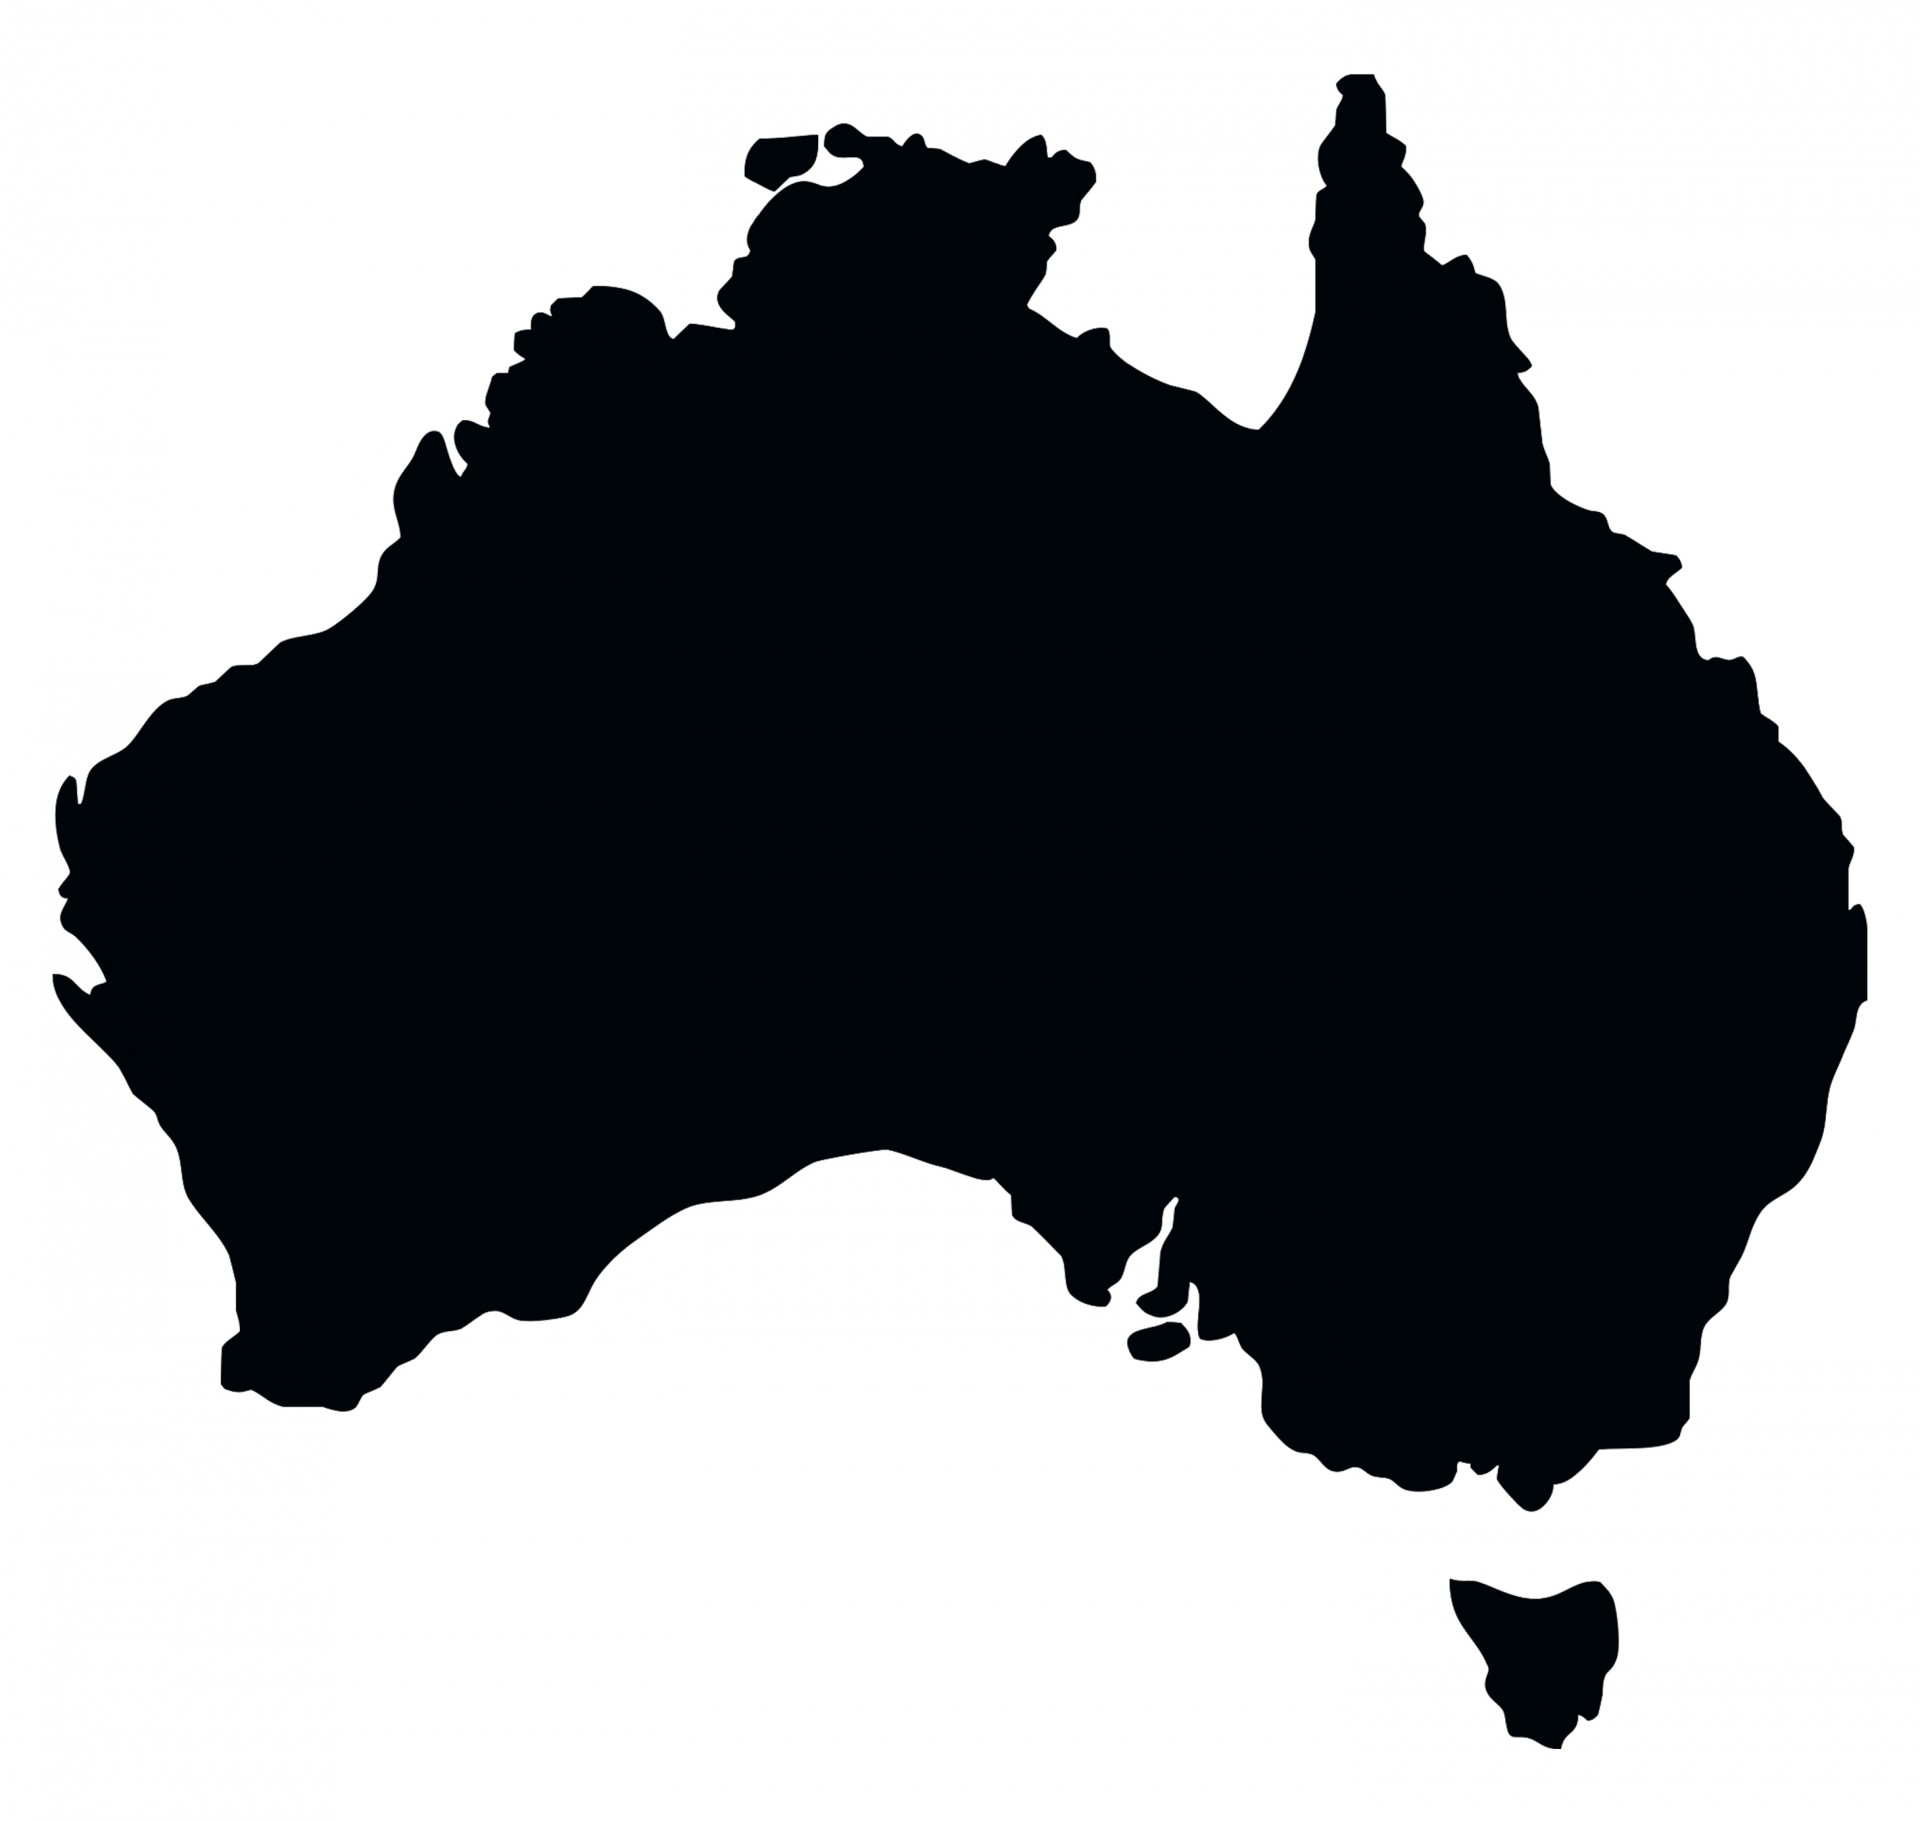 Australia,  Šalis,  Žemėlapis,  Kontūrai,  Figūra,  Juoda,  Siluetas,  Izoliuotas,  Balta,  Fonas